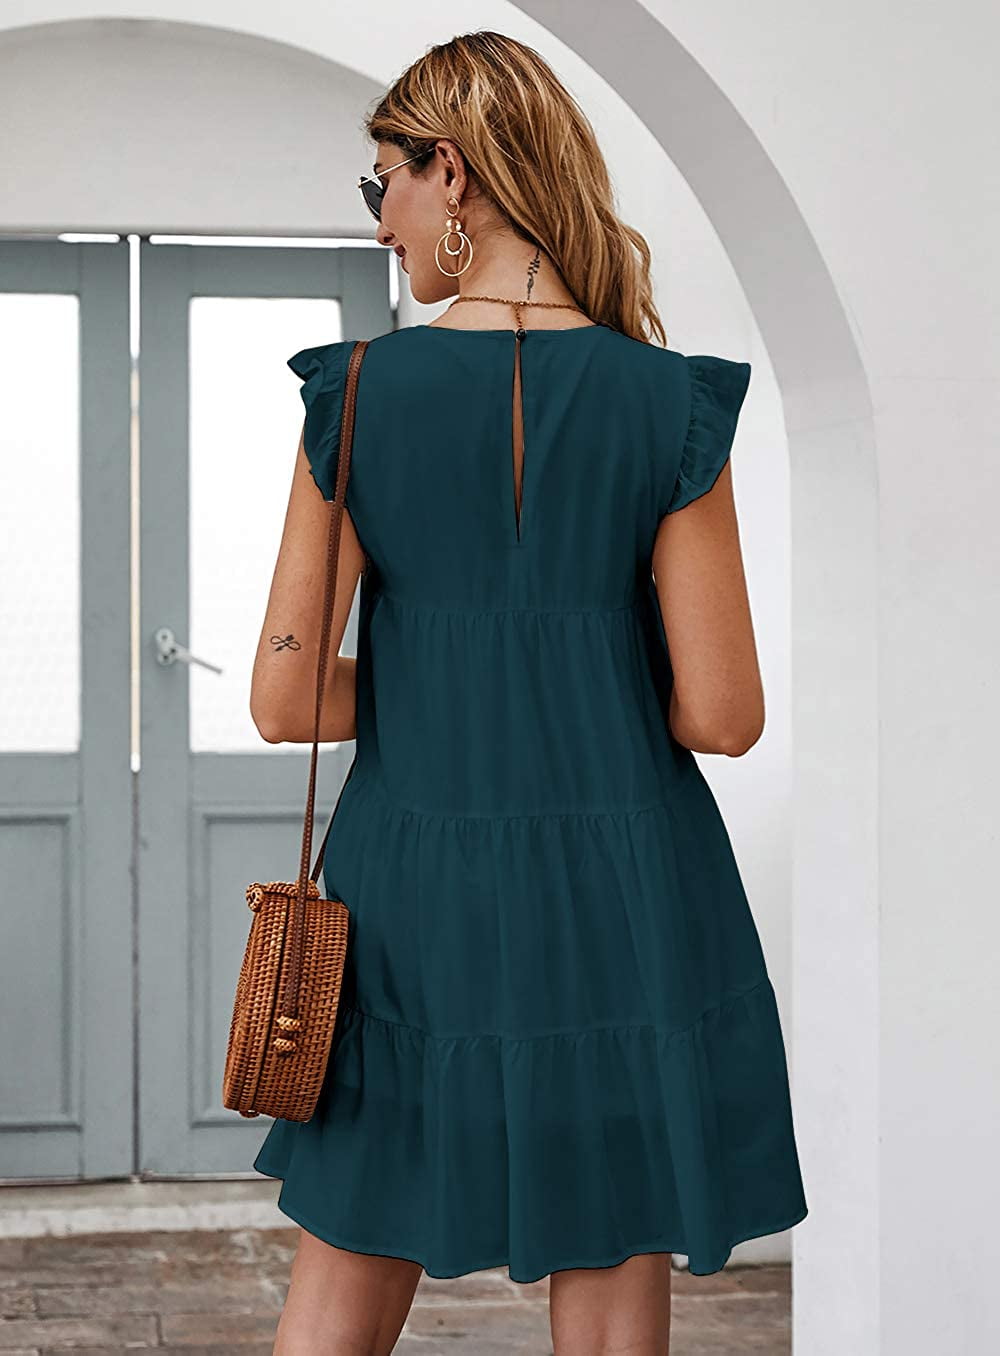 KIRUNDO Women’s Summer Dress Sleeveless Ruffle Sleeve Round Neck Mini Dress Solid Color Loose Fit Short Flowy Pleated Dress